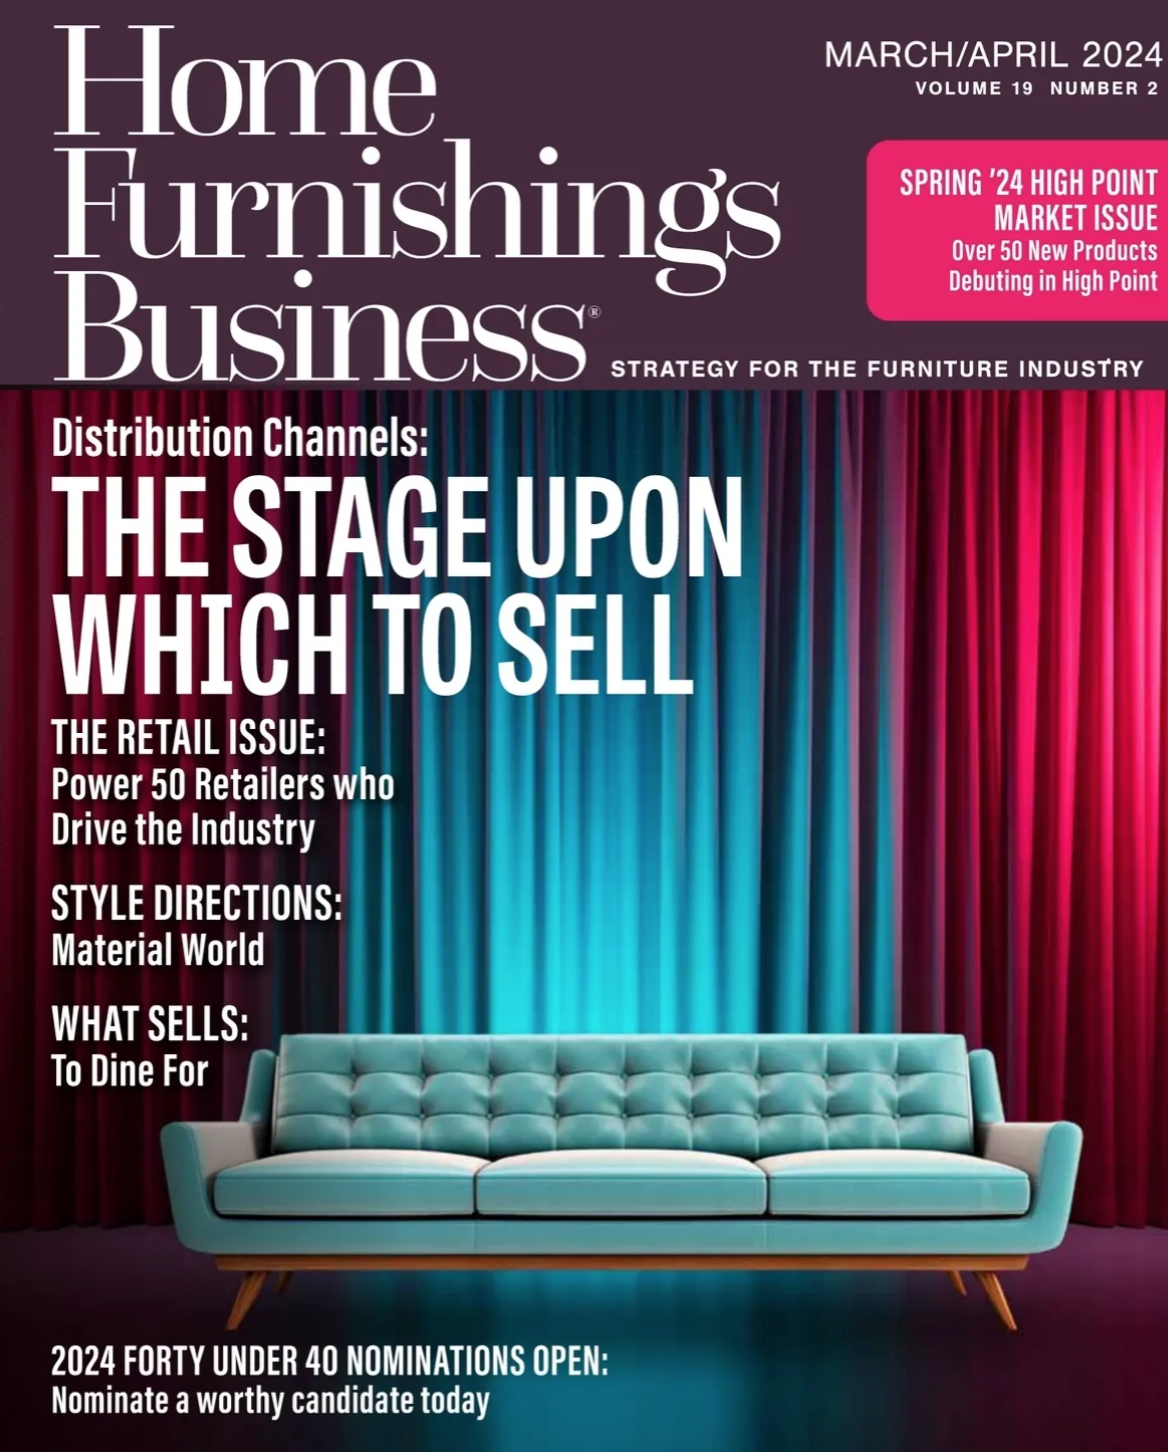 Home Furnishings Business Sept/Oct 2023 Magazine